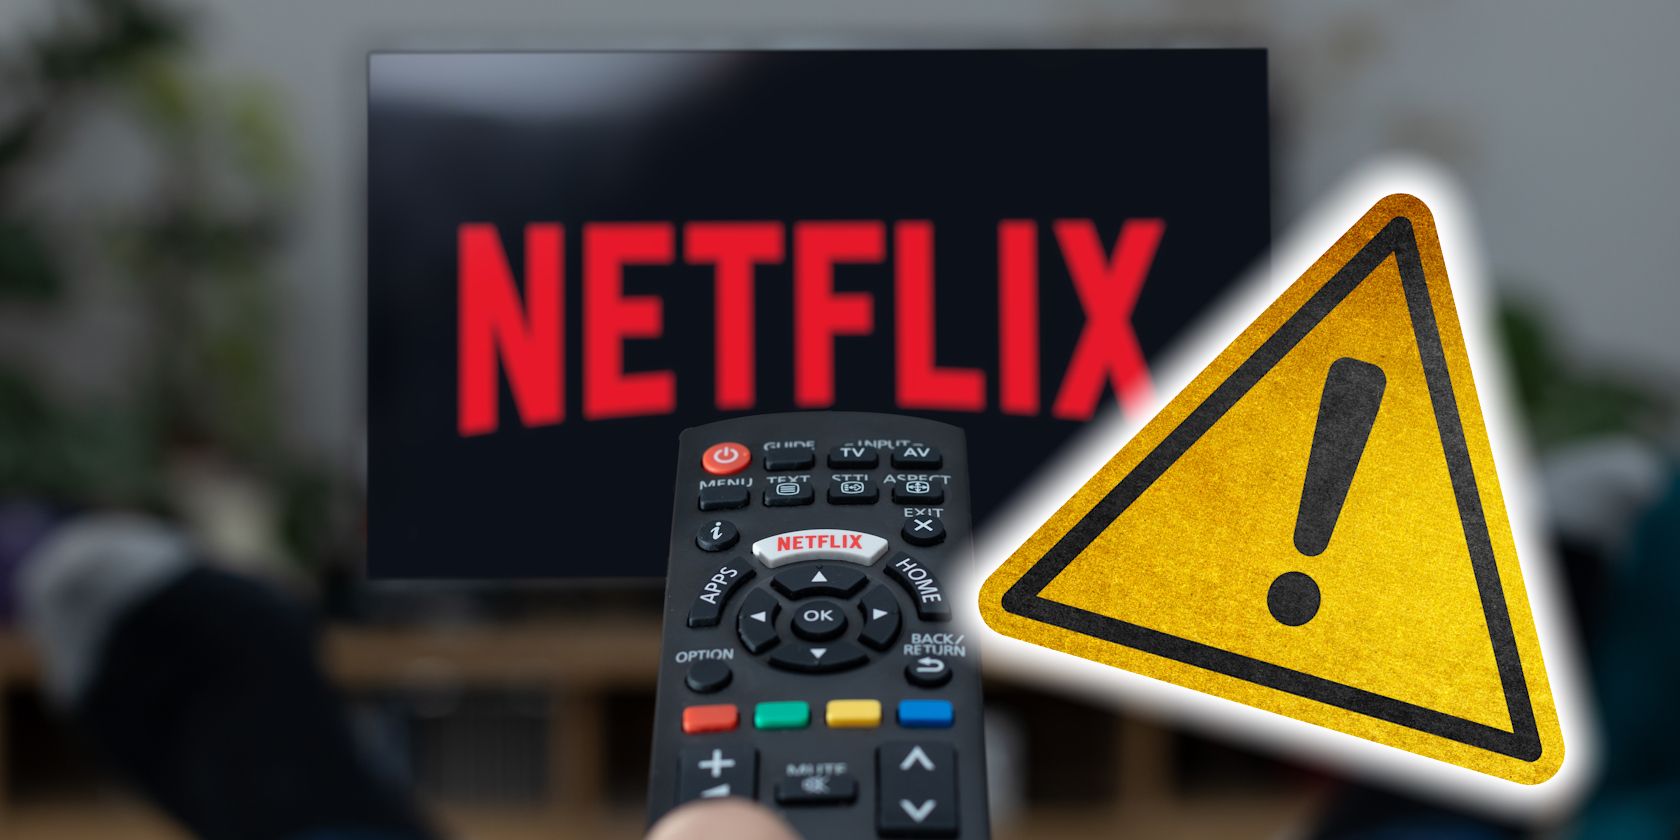 netflix logo on tv screen with yellow error warning symbol